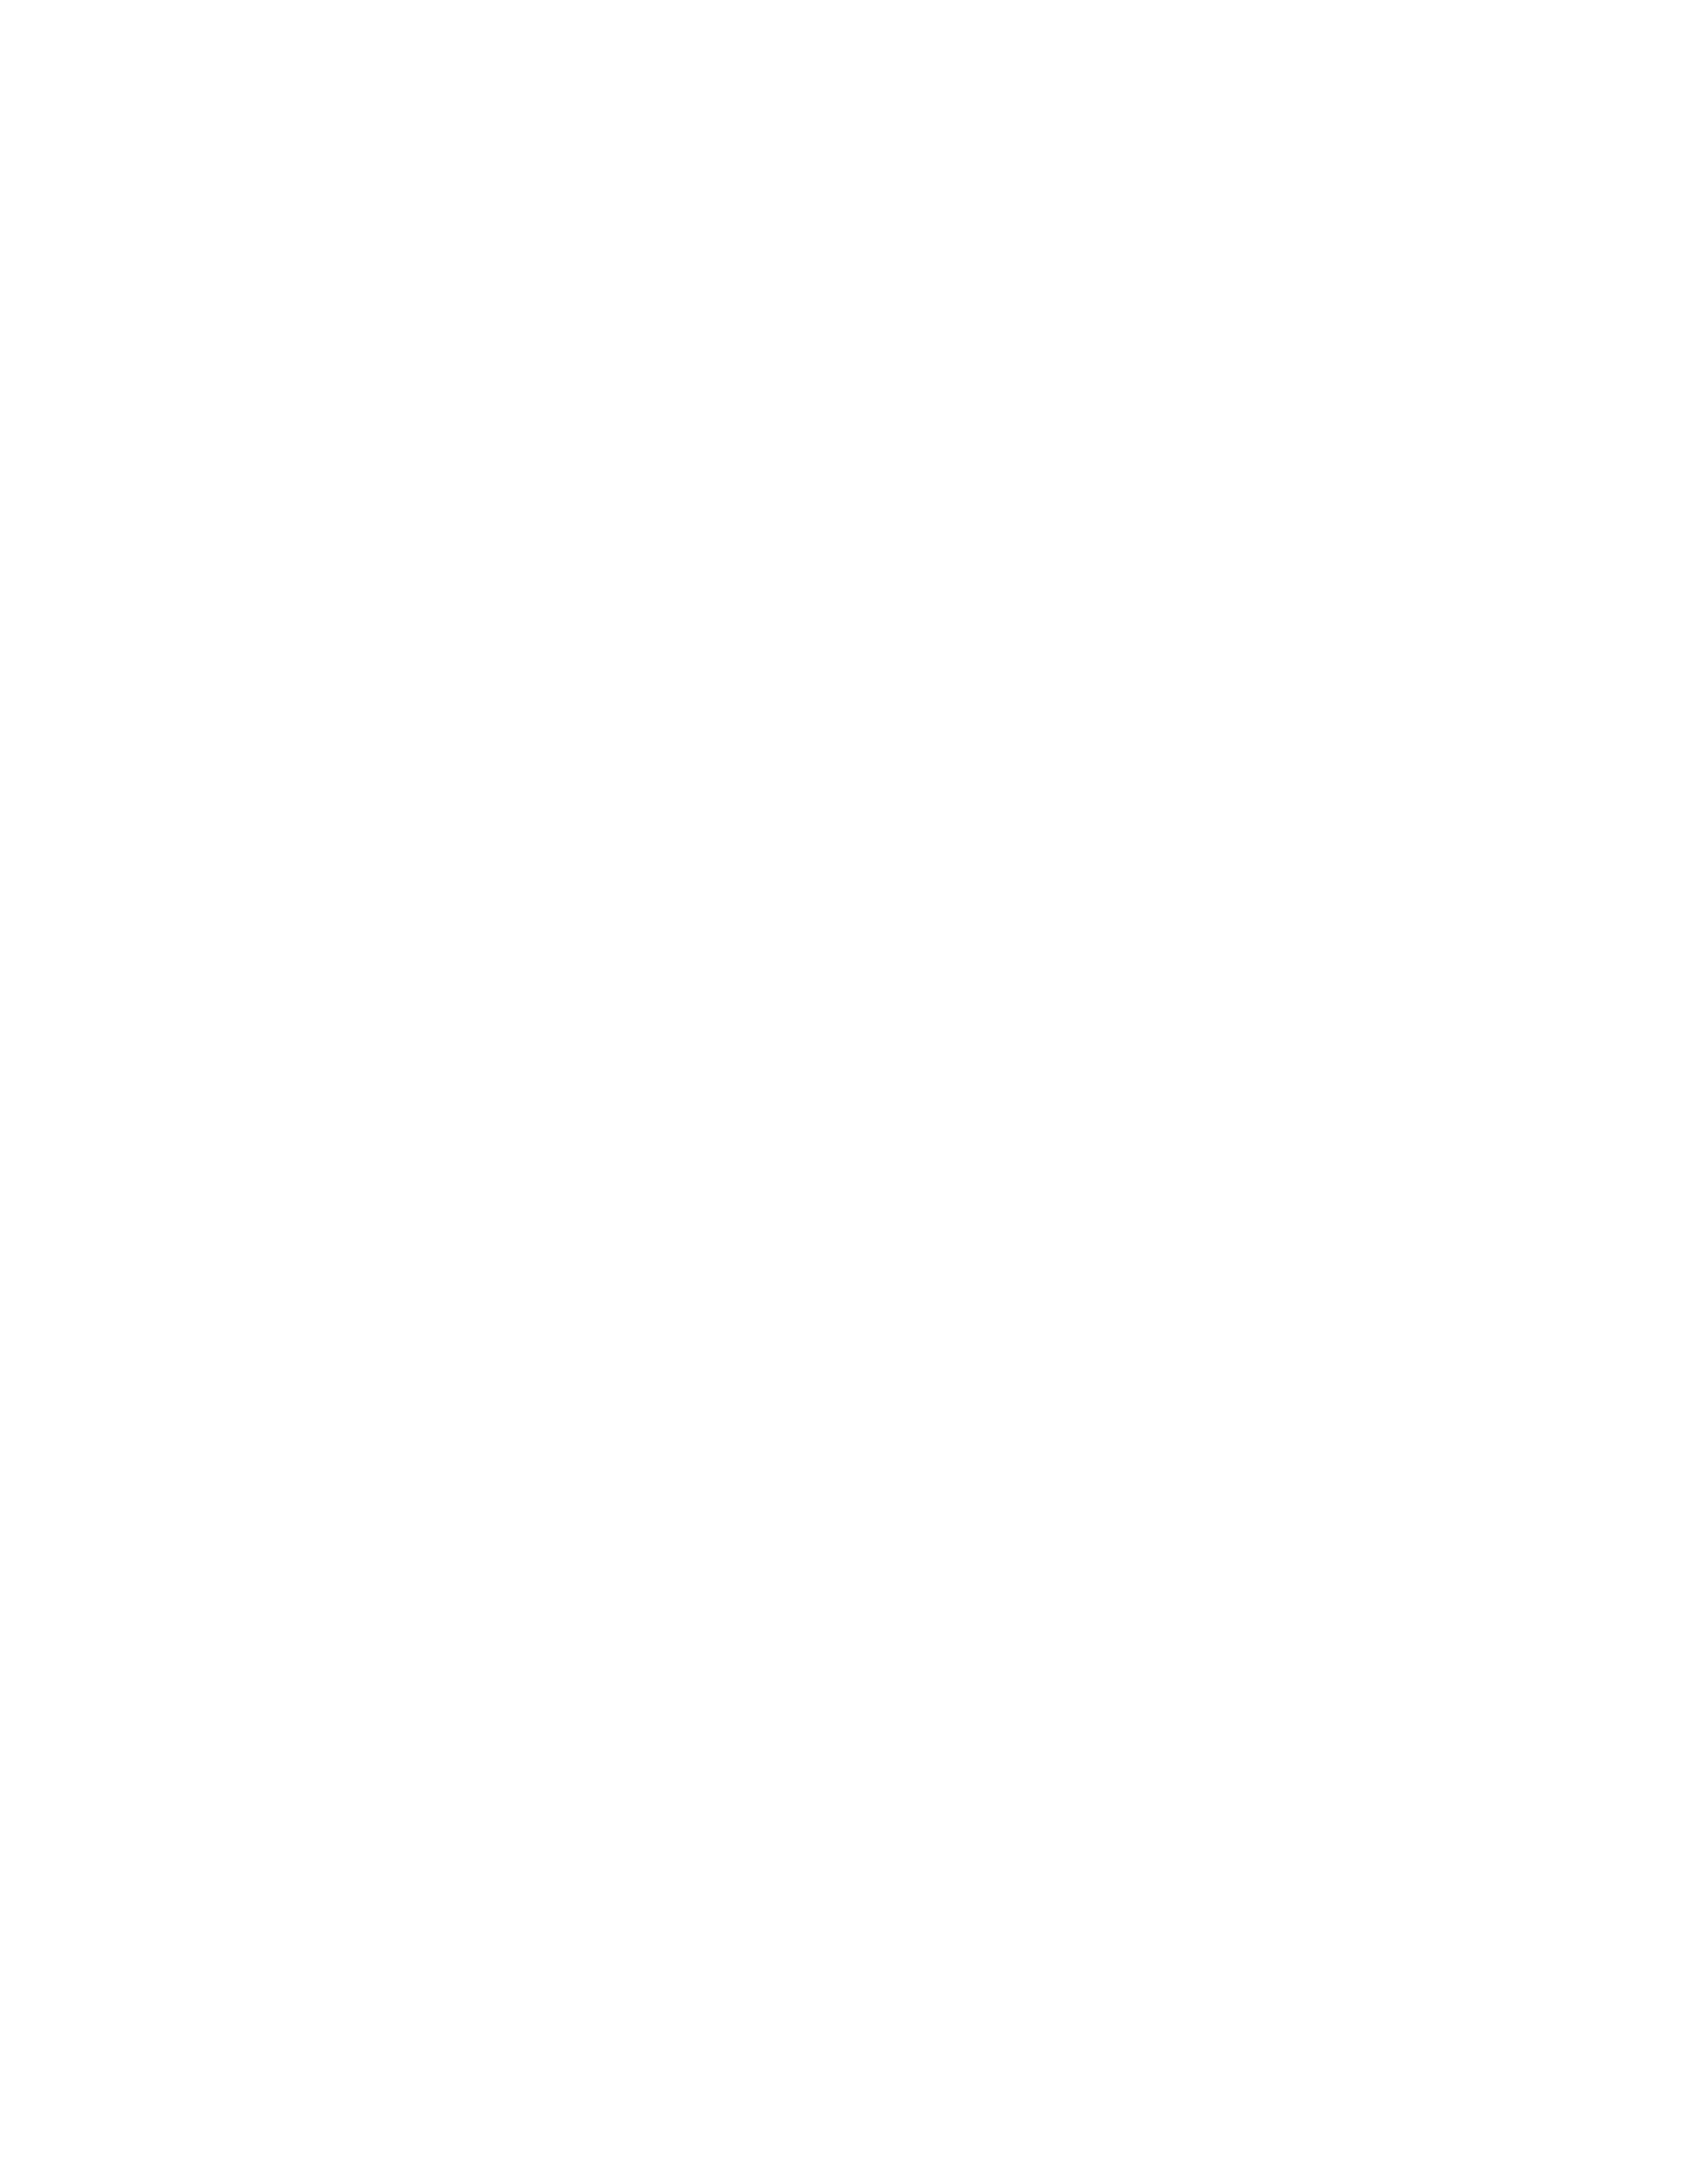 Fondation_Lucien-Labelle_logo_Blanc_vsF_aout_20_300DPI.png